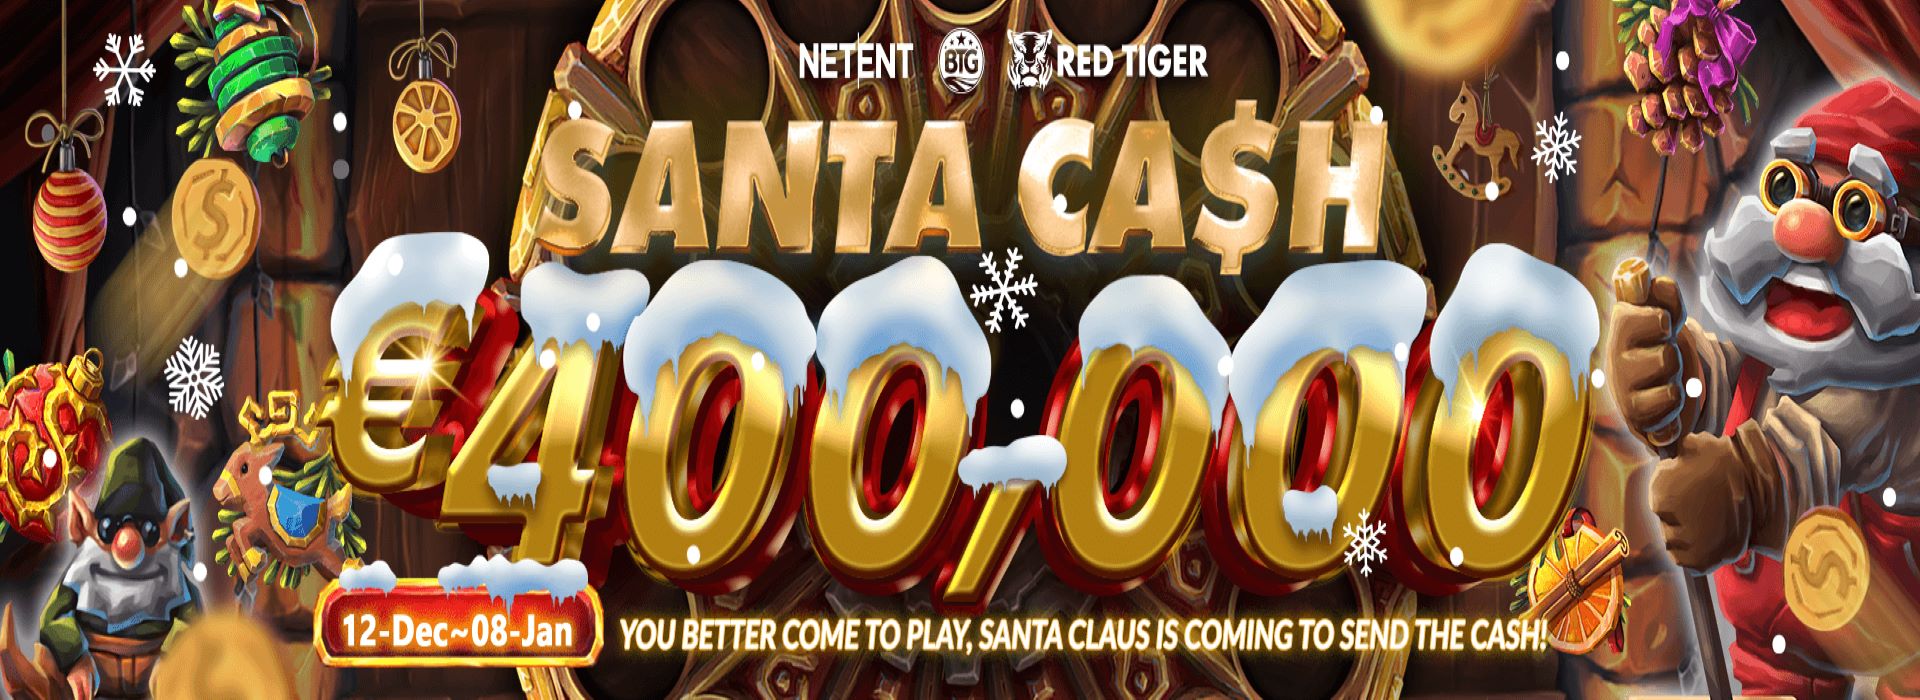 Santa Cash!!!Total Prize up to € 400,000 !!! 